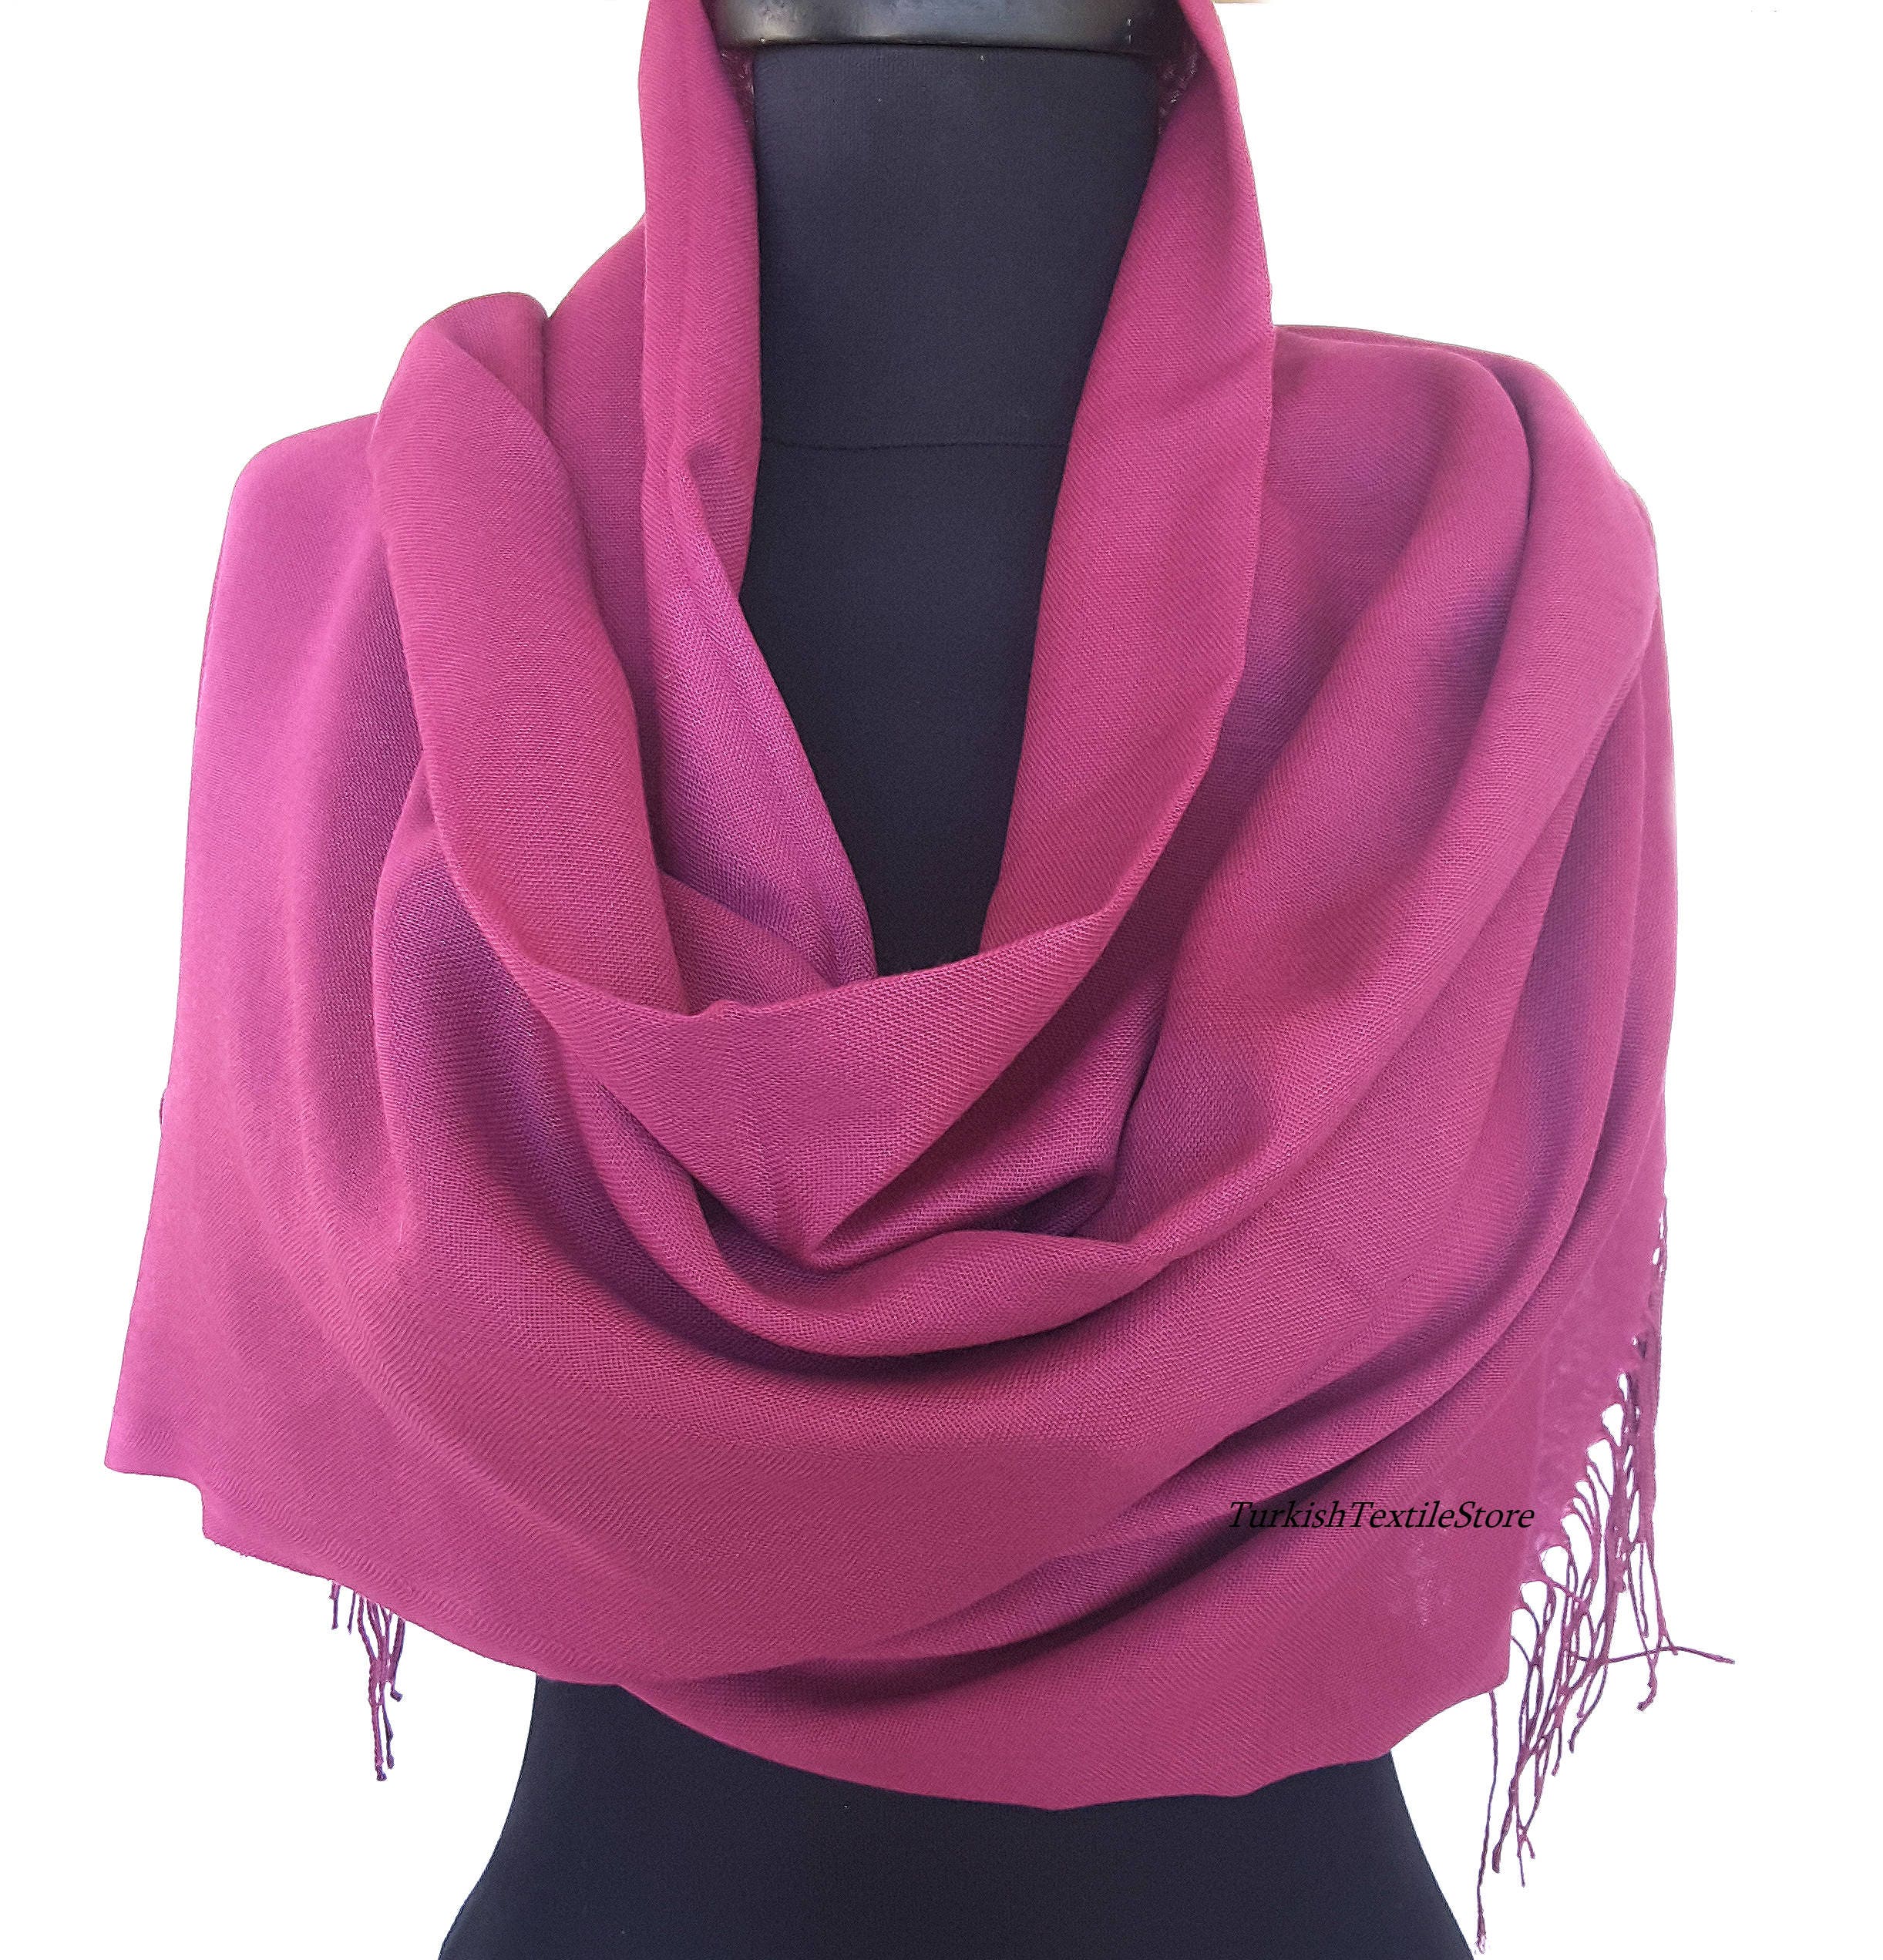 Pink/Multicolored Single discount 70% NoName shawl WOMEN FASHION Accessories Shawl Pink 